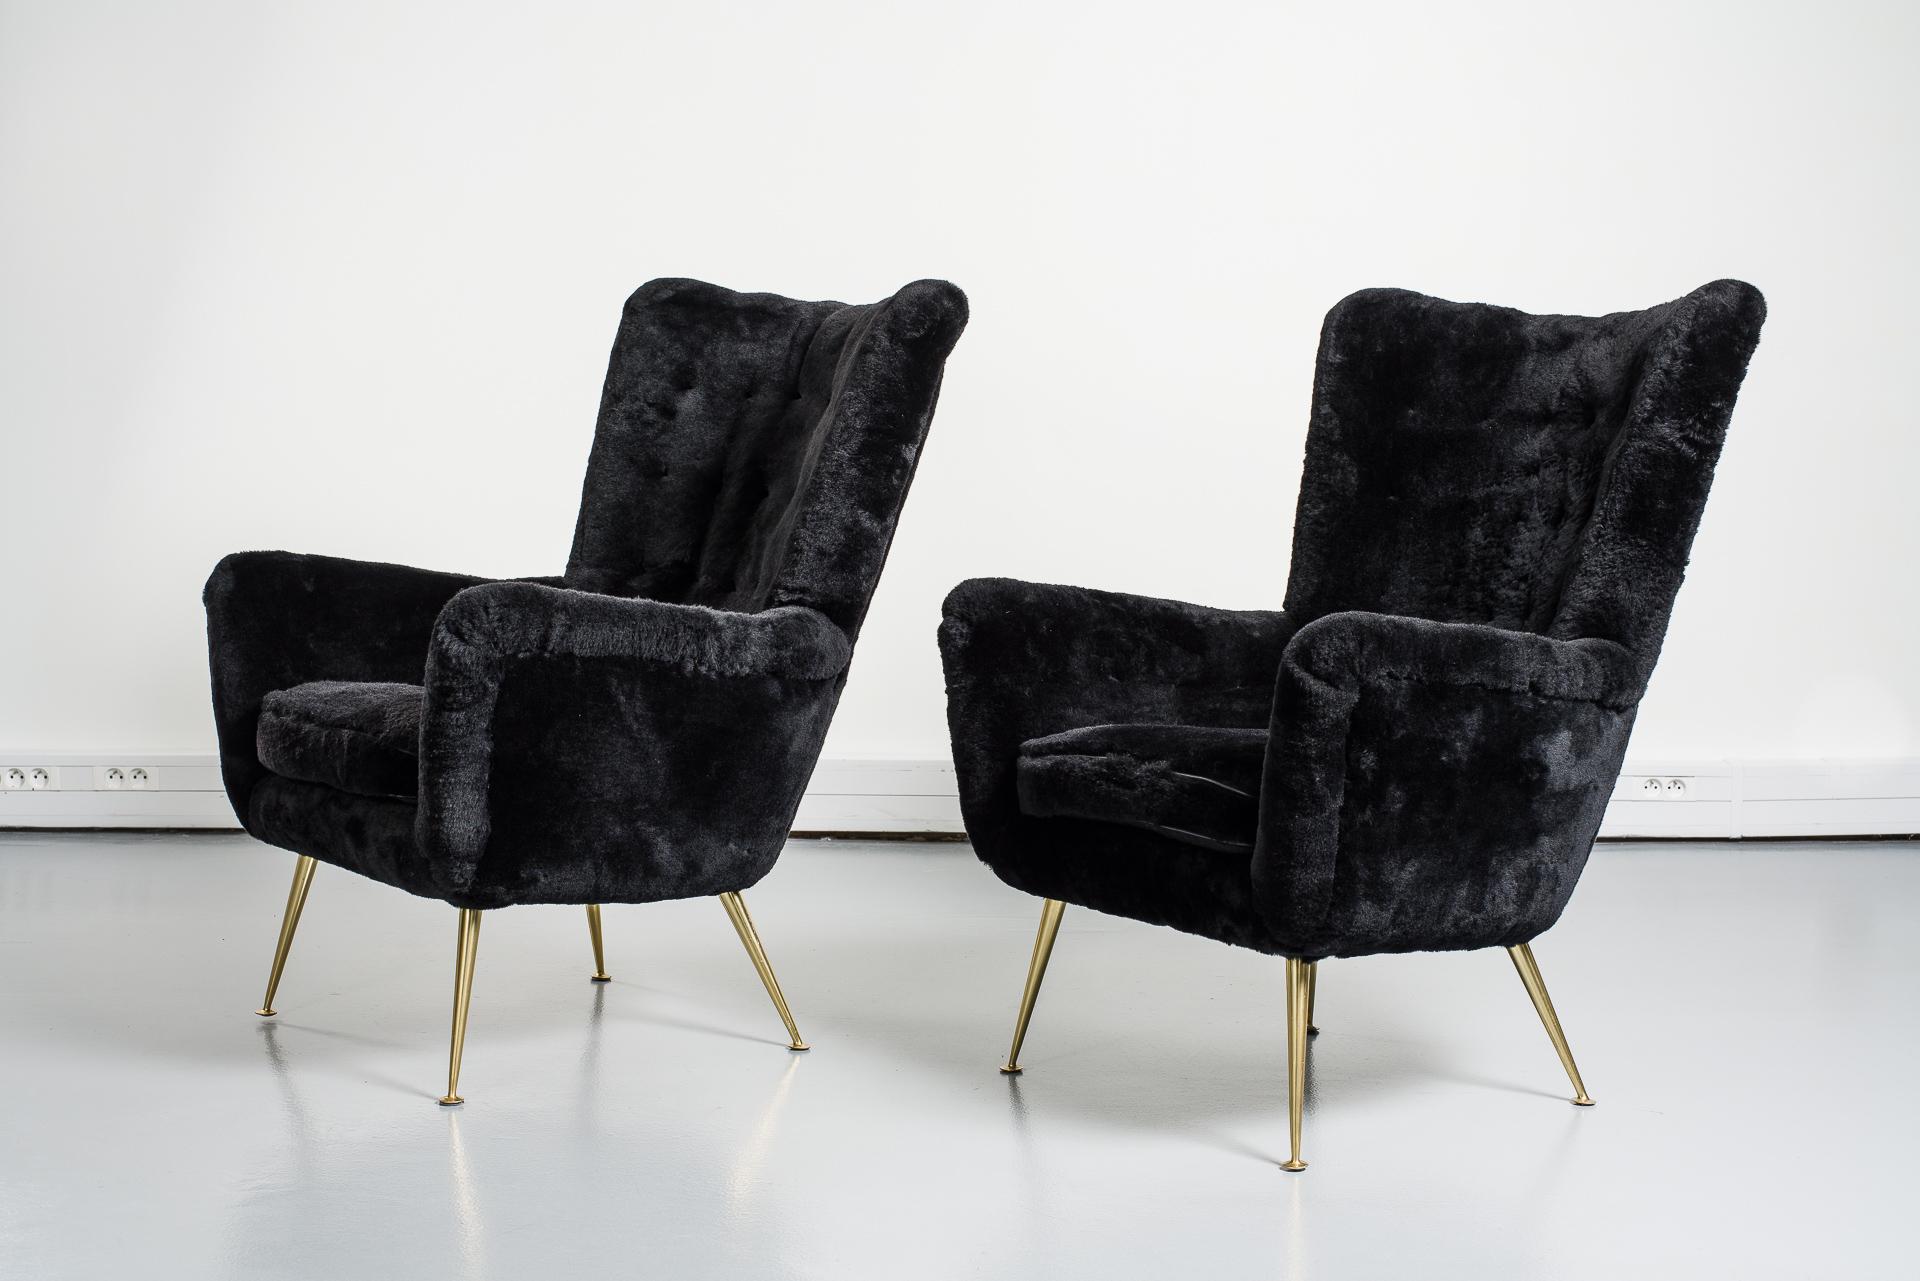 Pair of italian vintage armchairs, 1950
Black shearling upholstery.
Brass legs.
 